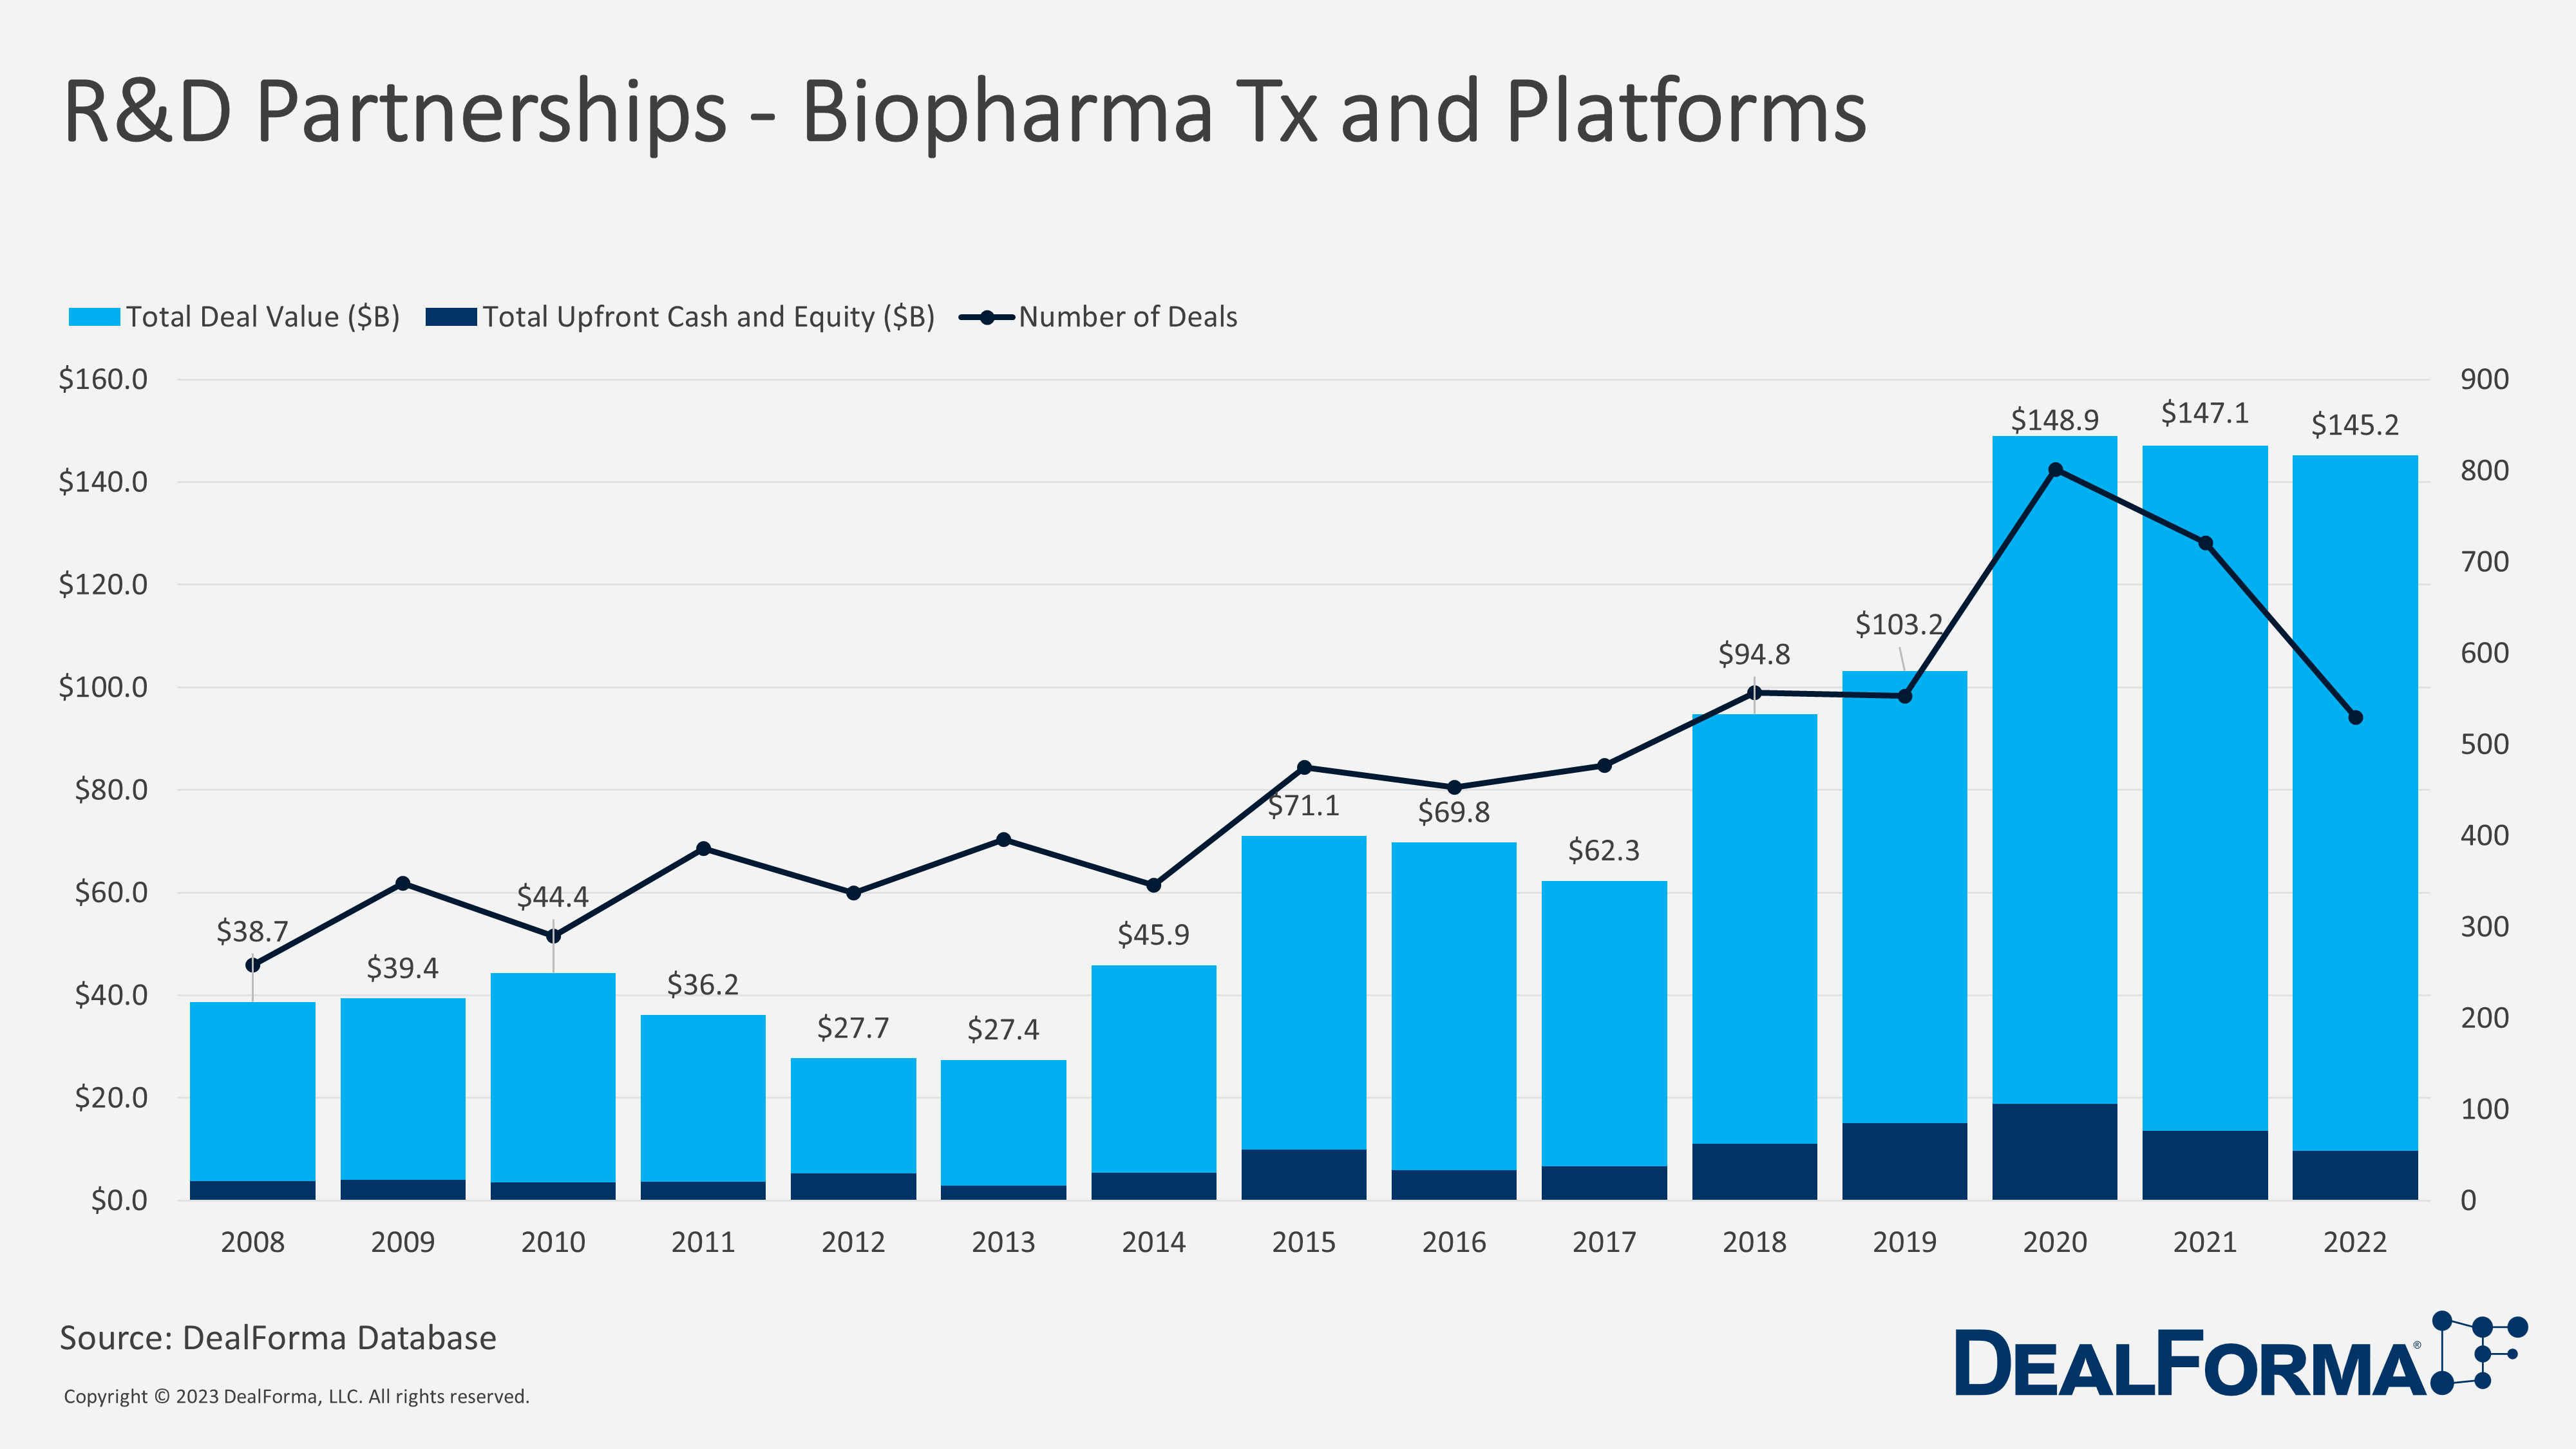 R&D Partnerships - Biopharma TX and Platforms